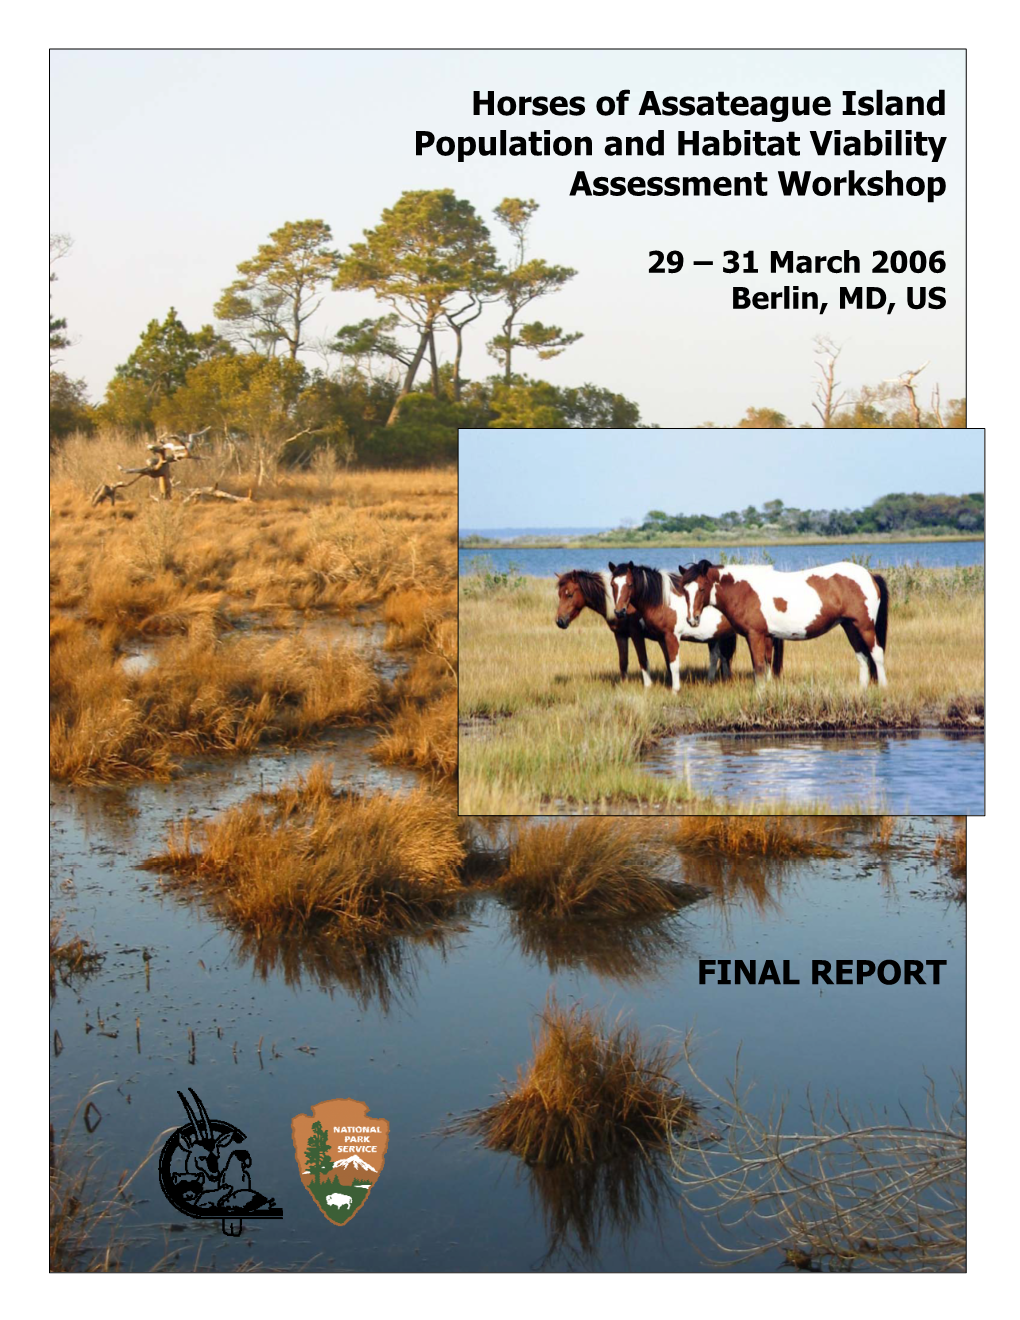 Horses of Assateague Island Population and Habitat Viability Assessment Workshop